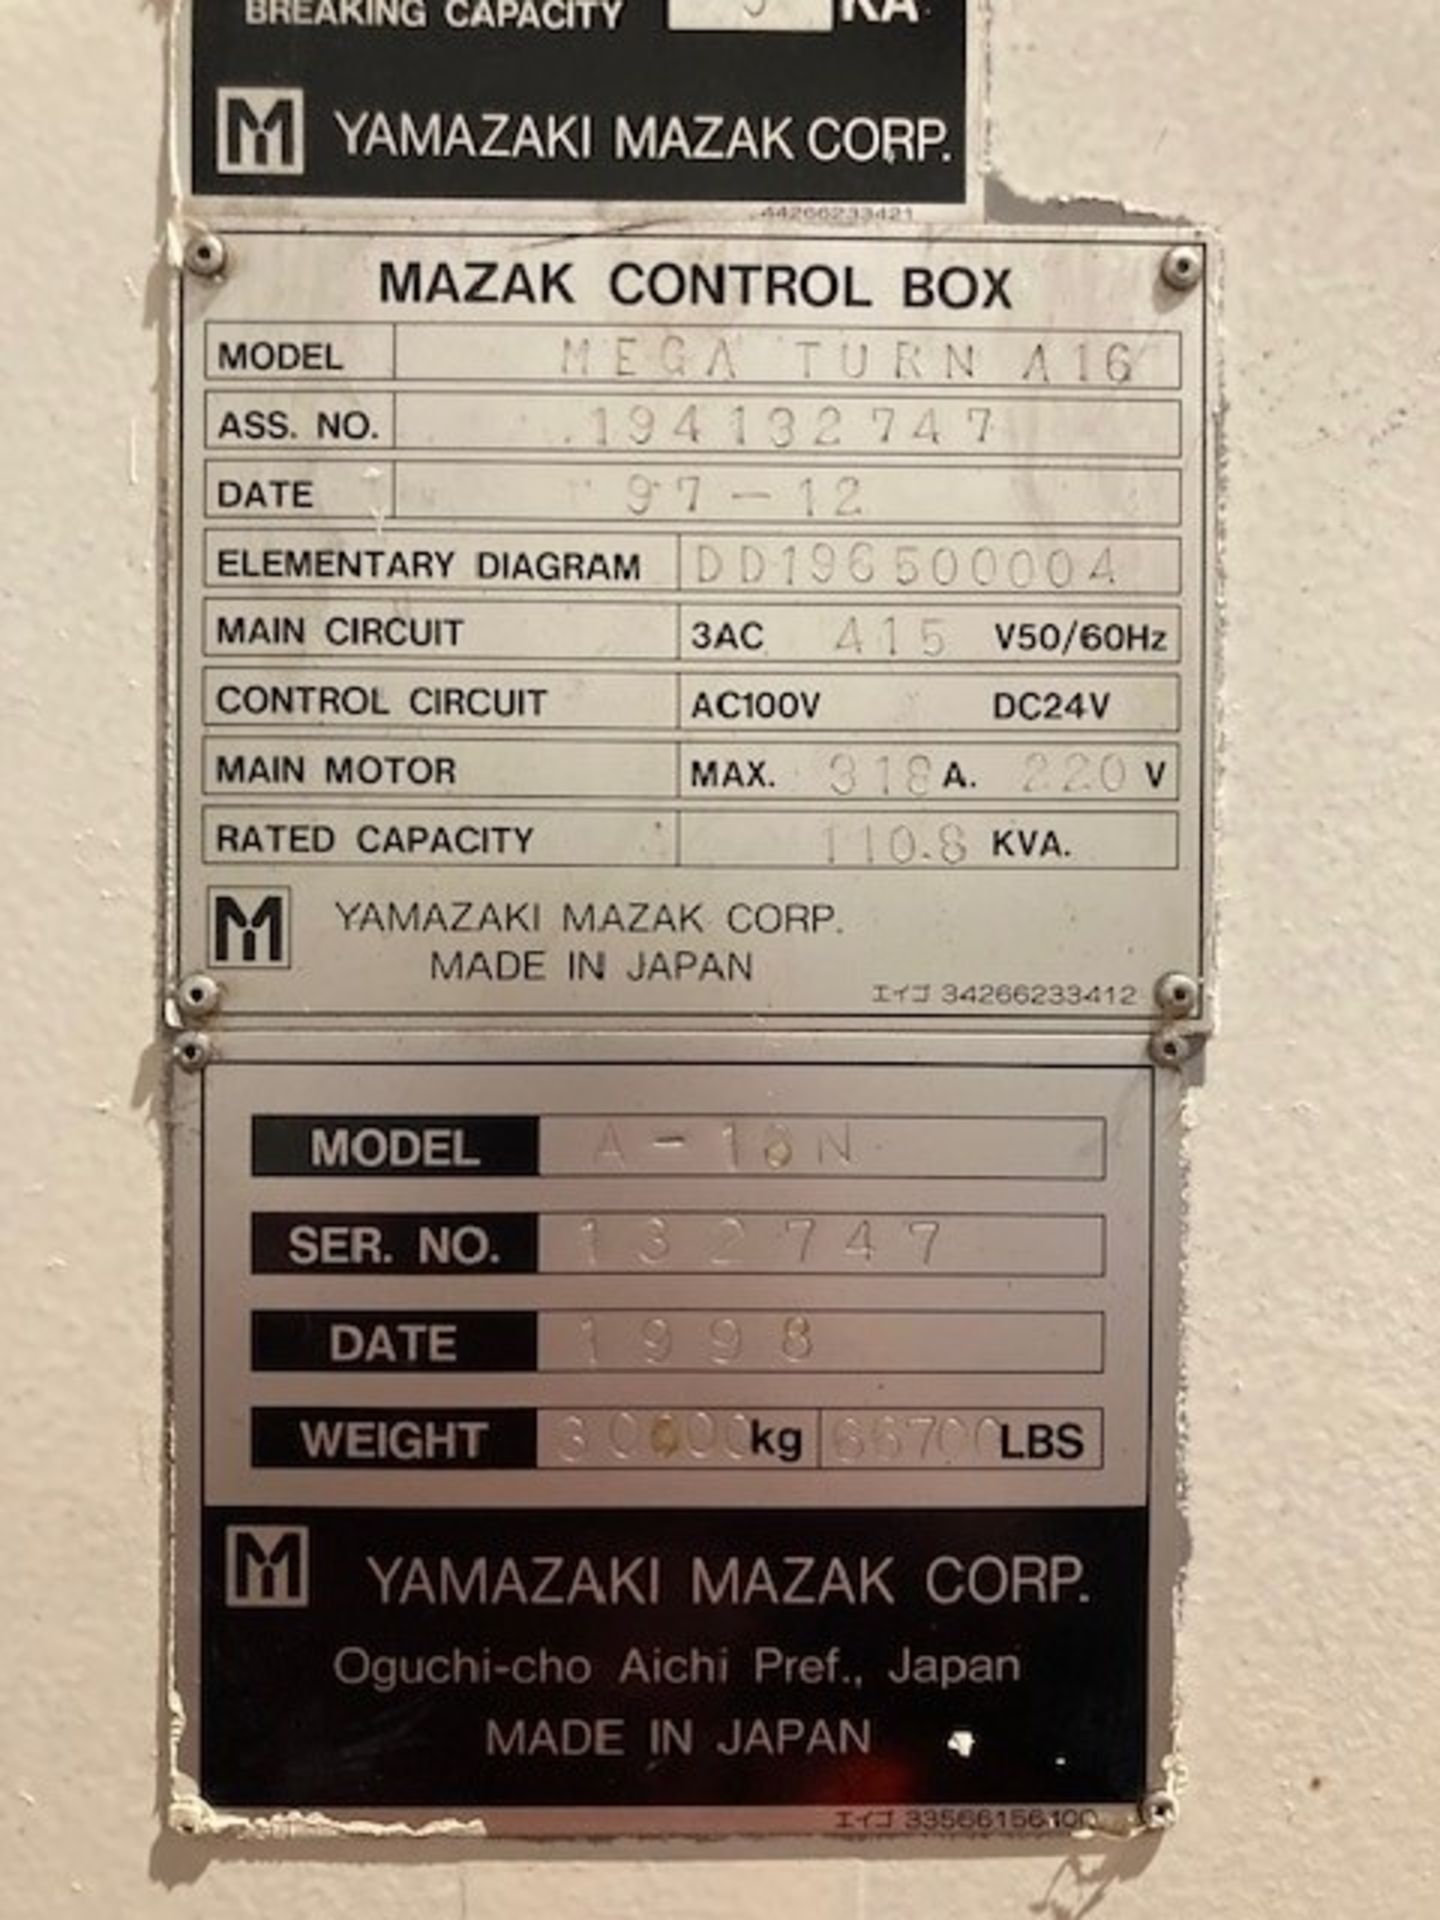 Mazak Megaturn A 16 N CNC Vertical Borer - Image 13 of 13